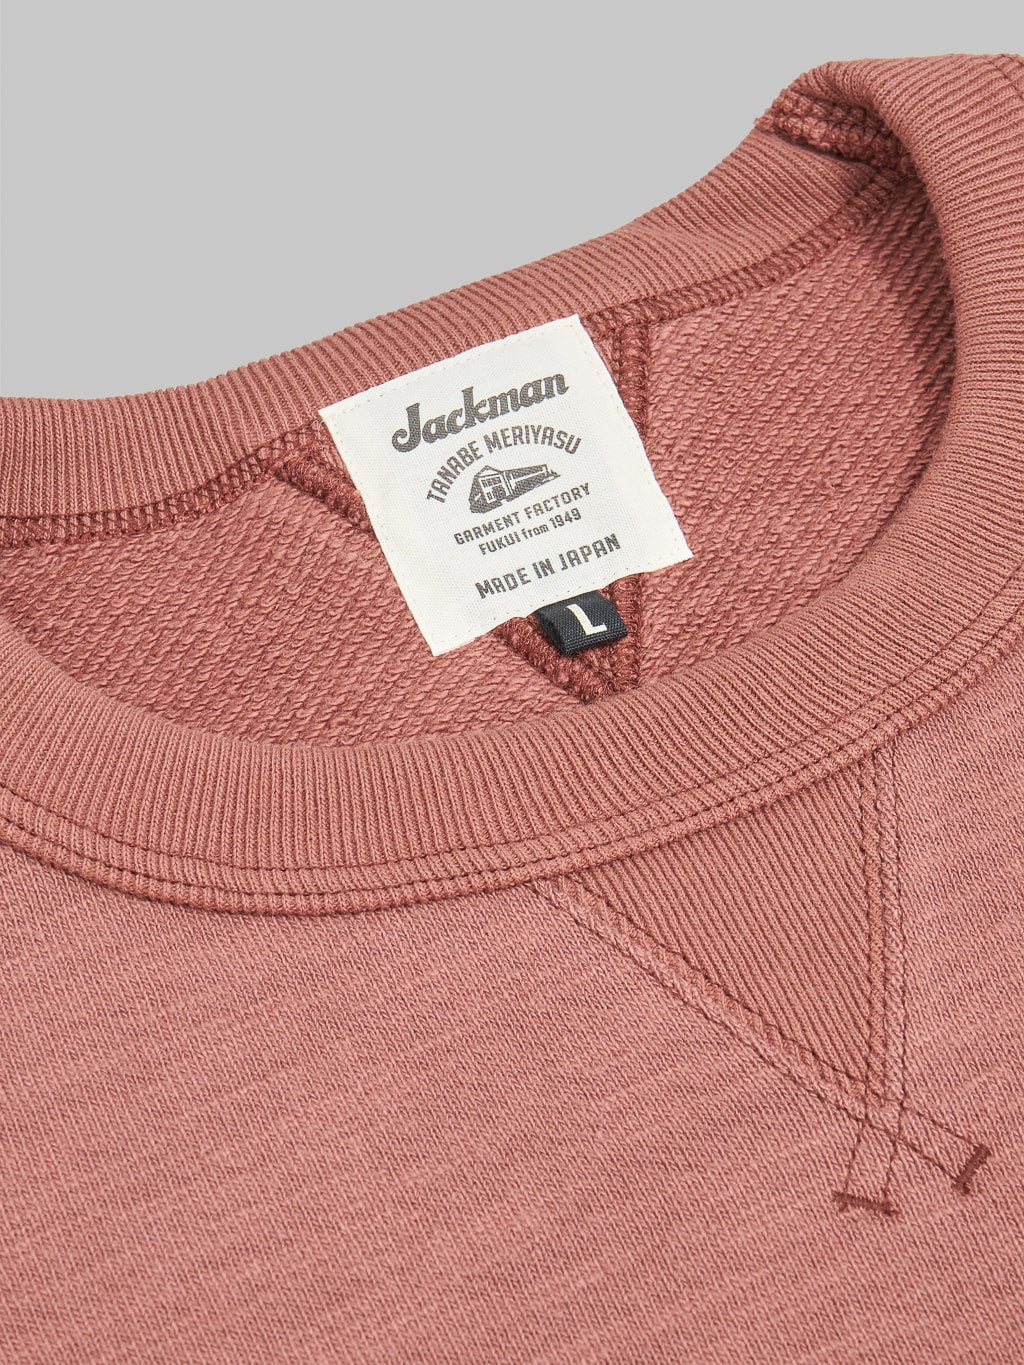 Jackman GG Sweat Crewneck Pale brick collar stitching